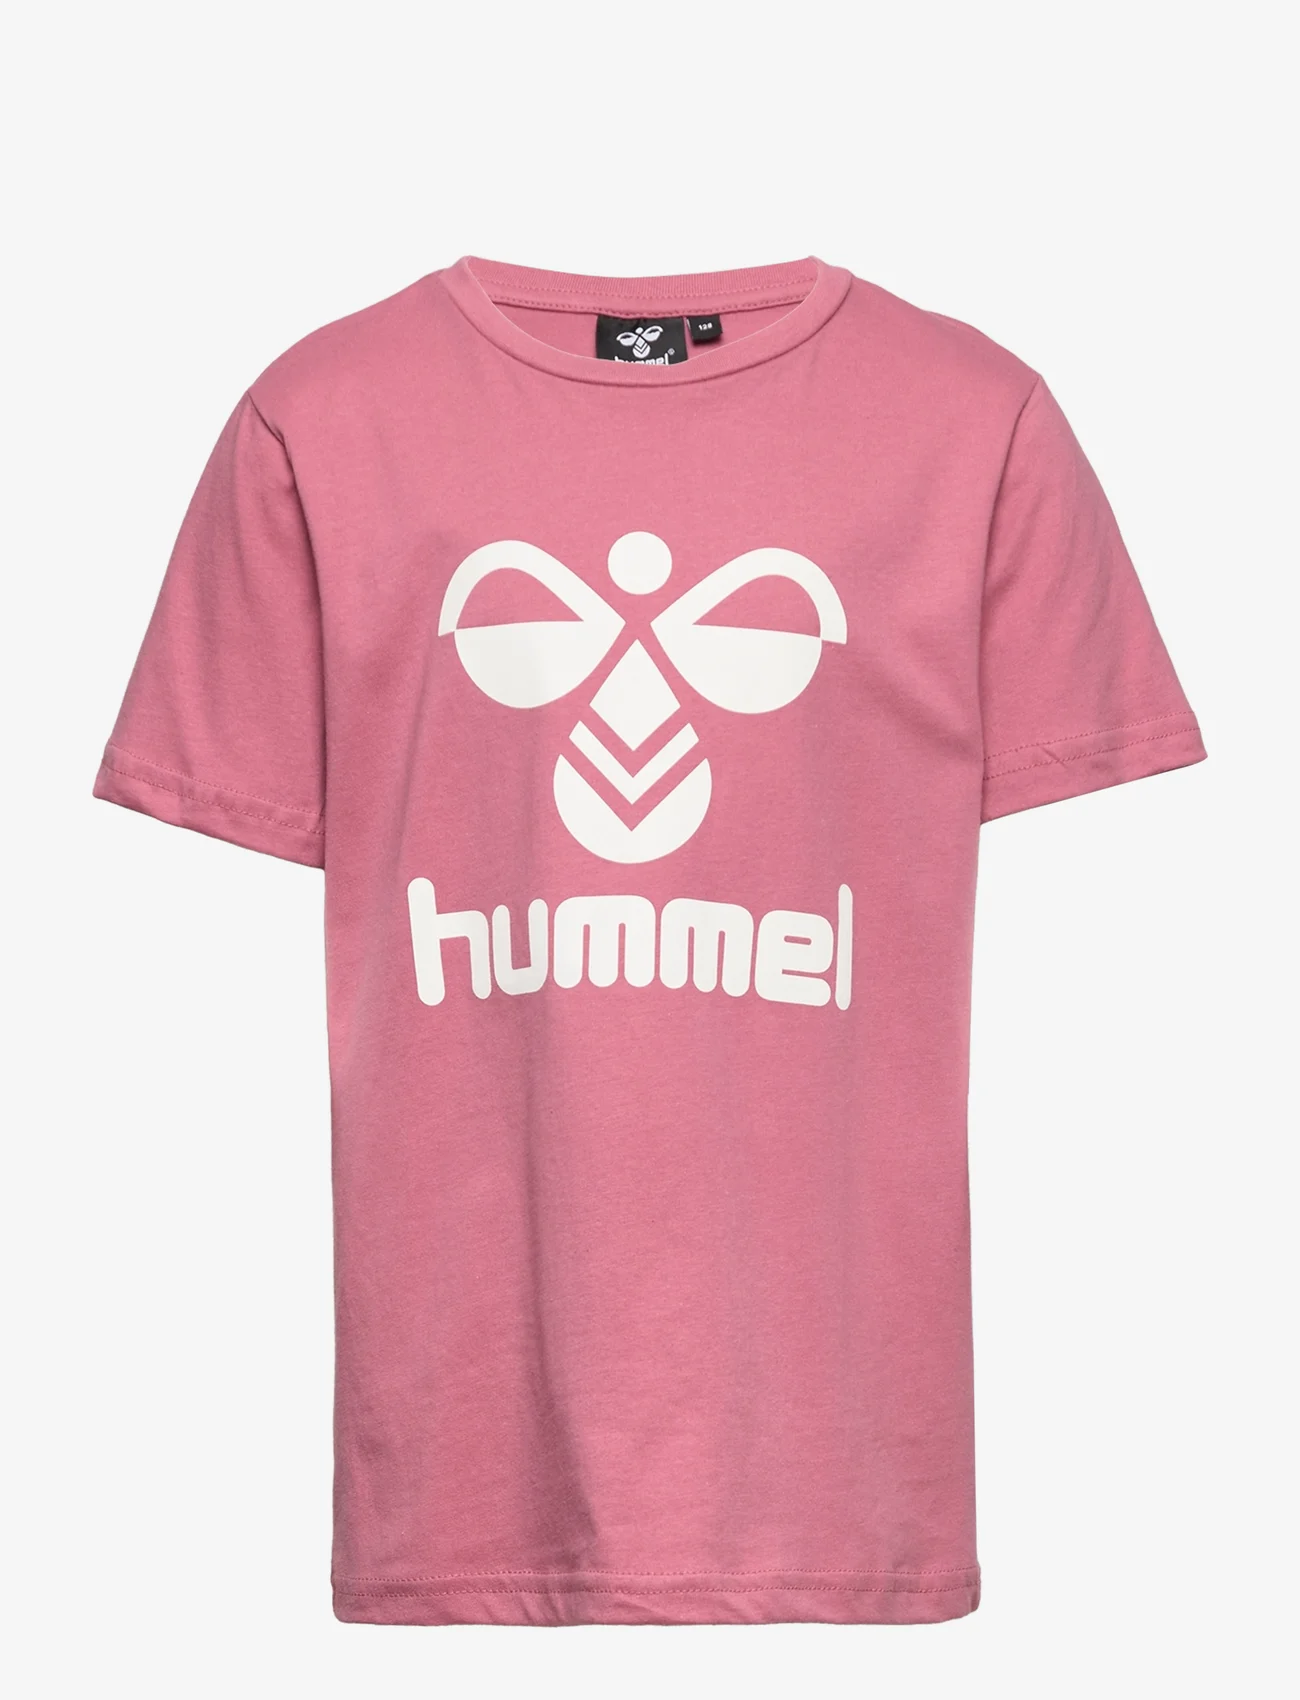 Hummel - hmlTRES T-SHIRT S/S - short-sleeved - heather rose - 0